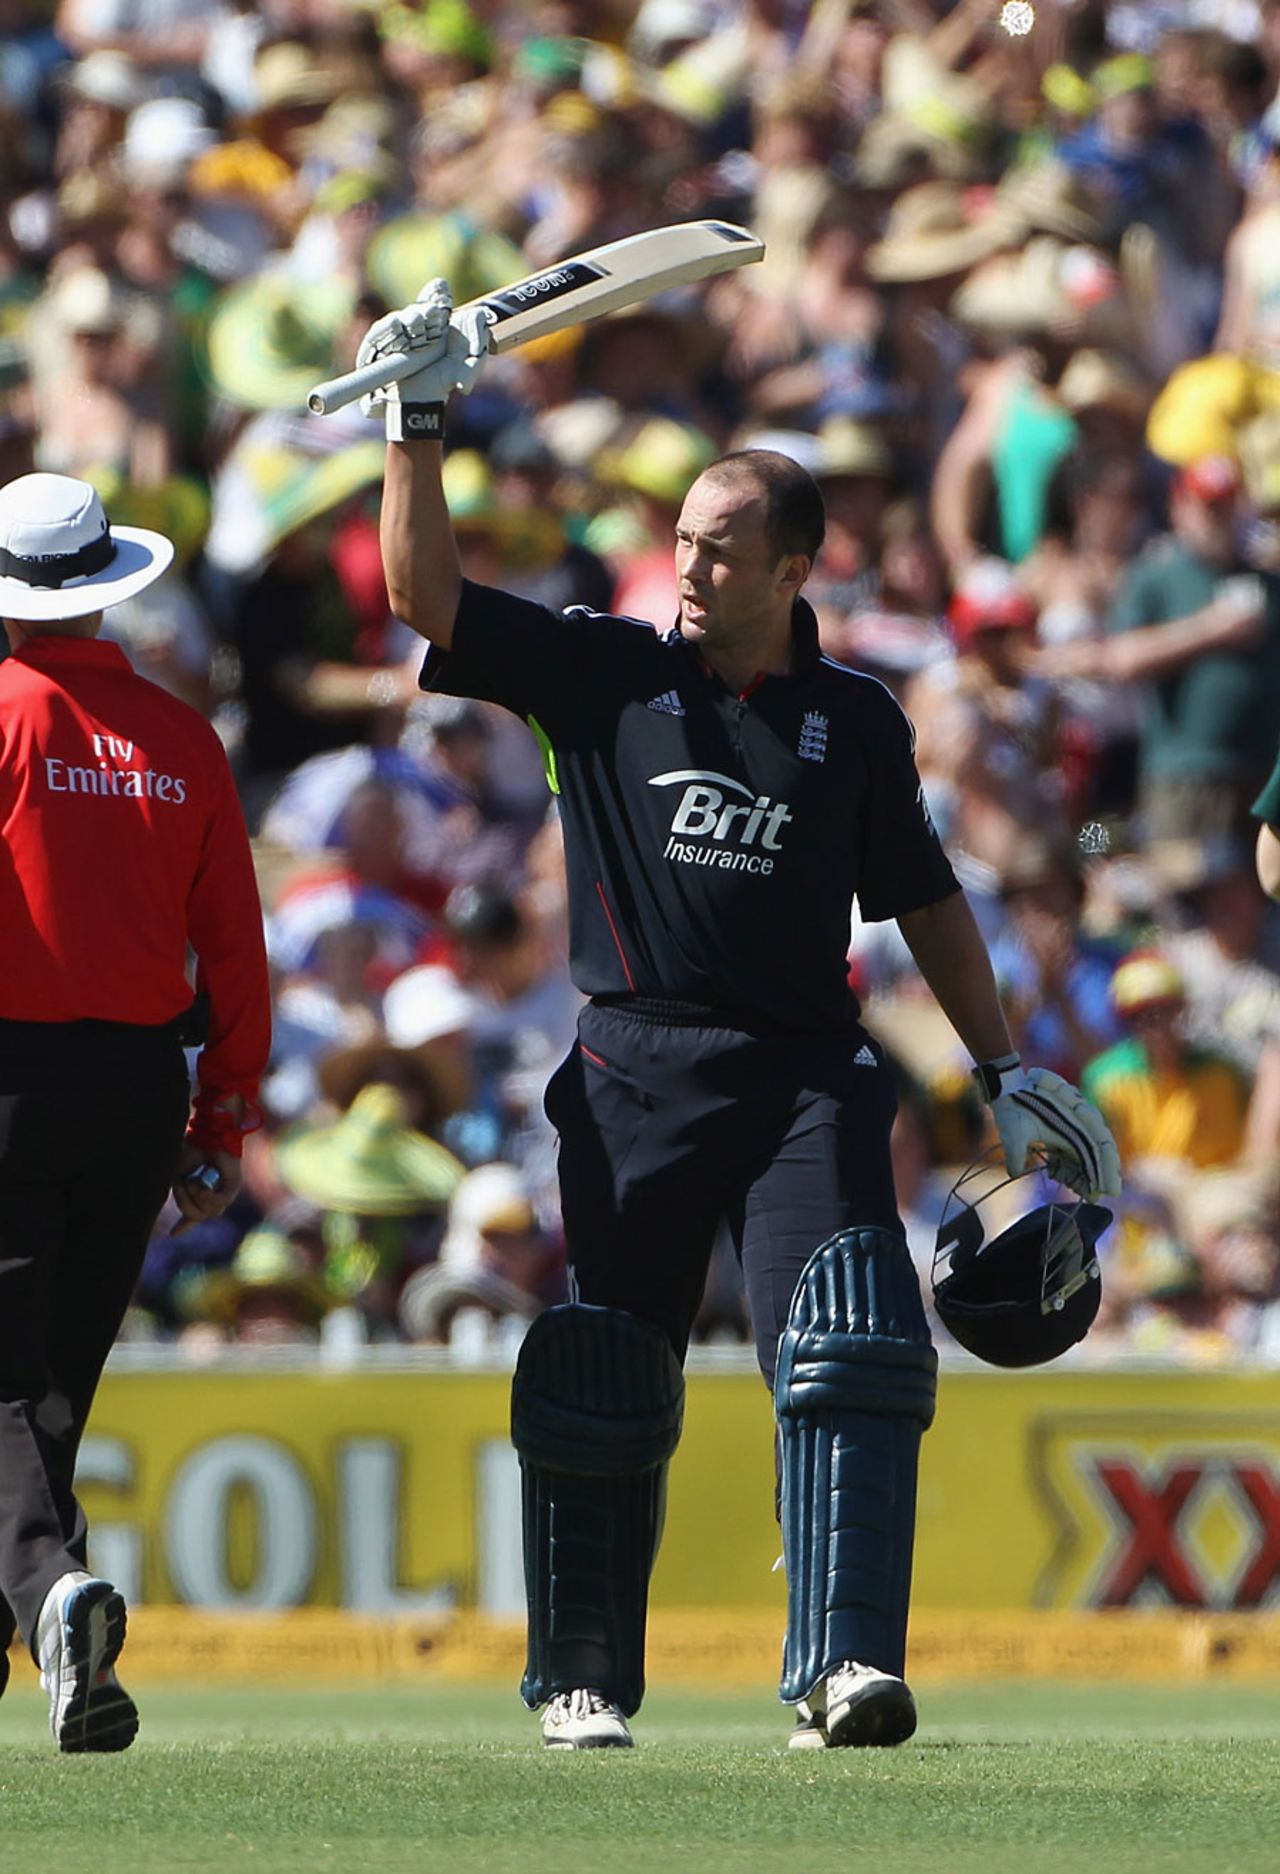 Jonathan Trott brought up his hundred from 117 balls, Australia v England, 4th ODI, Adelaide, January 26, 2011